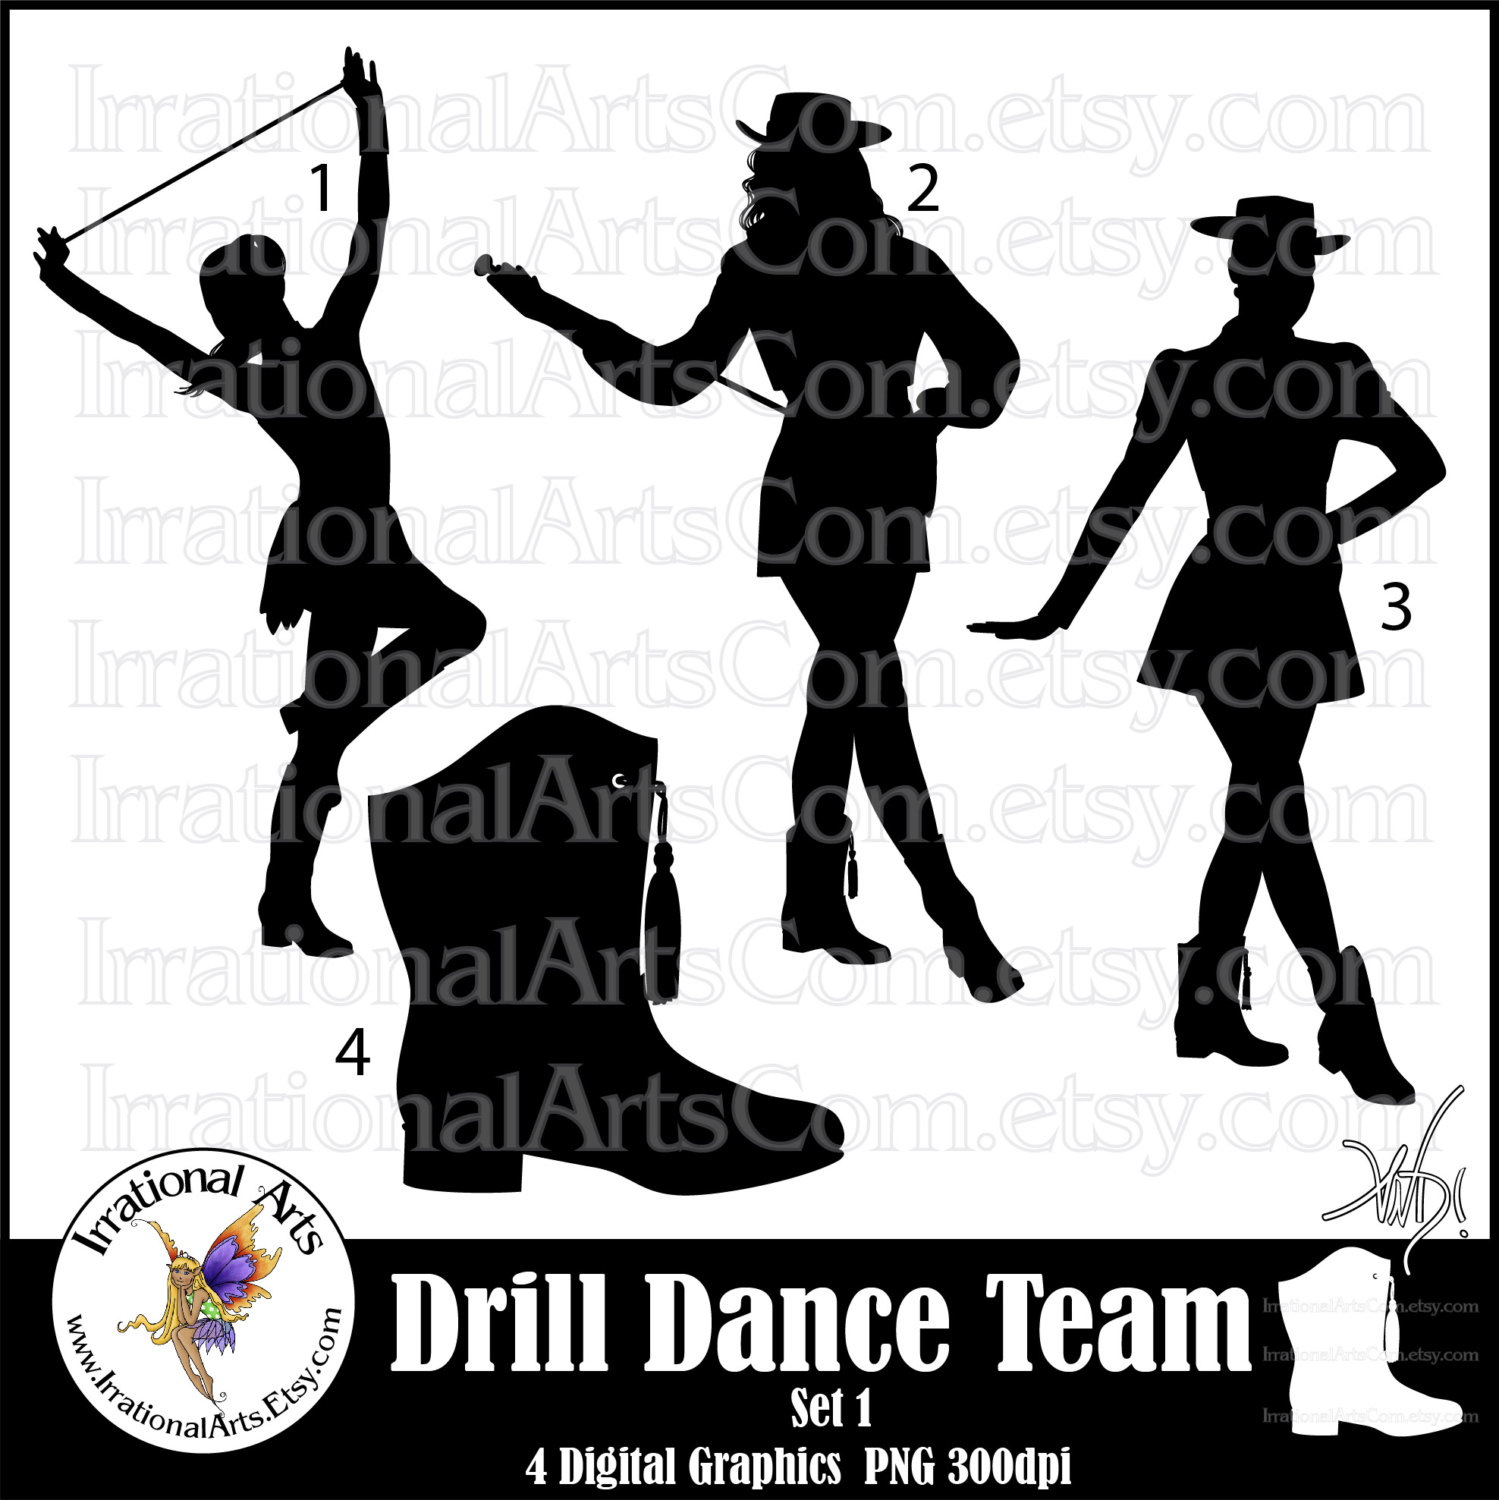 Drill Dance Team JUGENDGARDE 